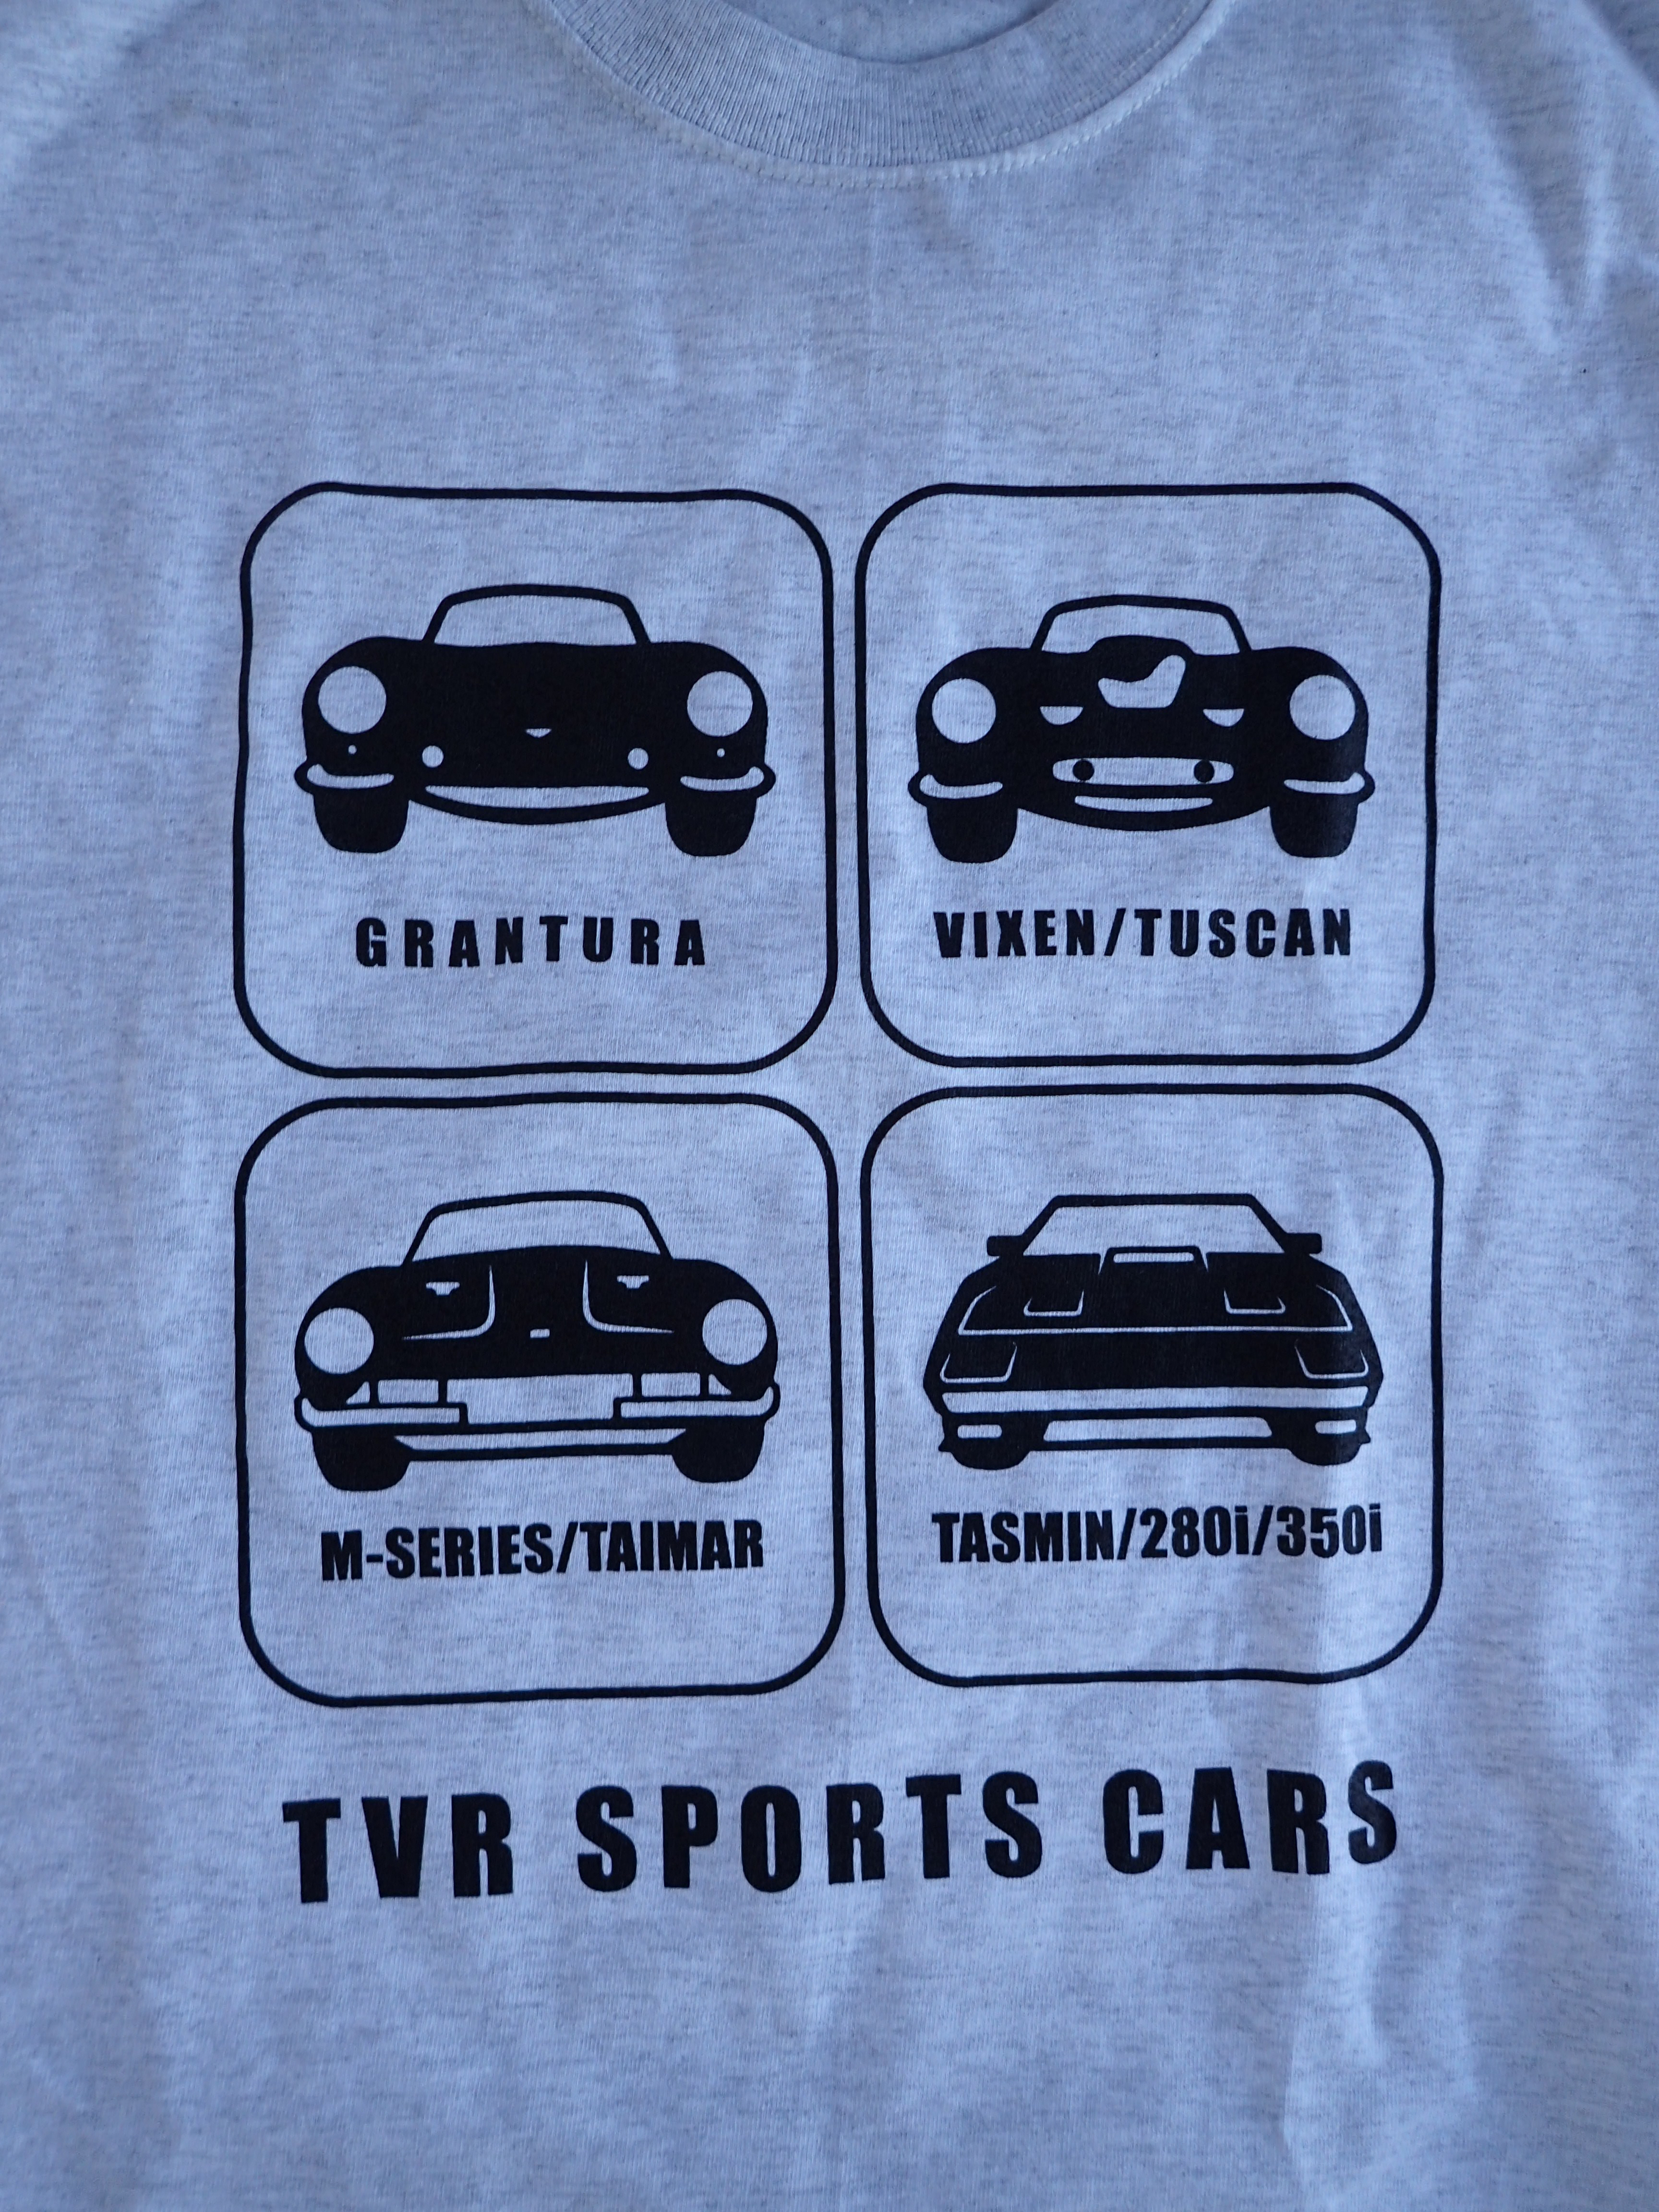 TVR Sports Cars Tee - Gray - LG